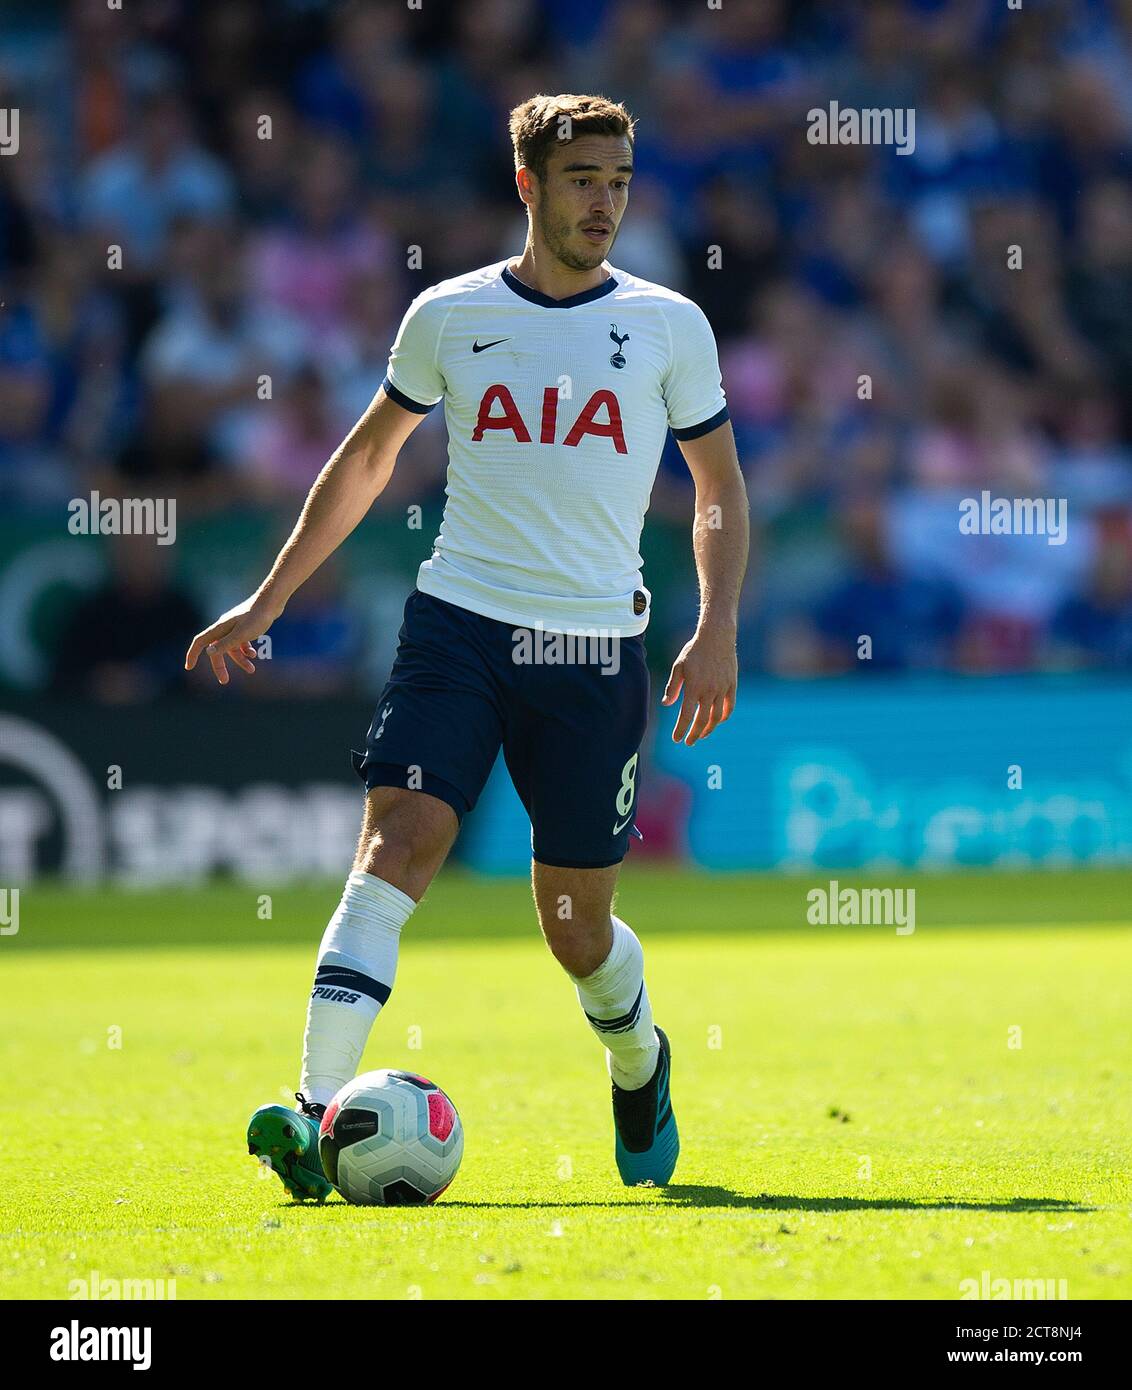 Harry Winks di Tottenham Hotspurs. Leicester City / Spurs. PHOTO CREDIT: © MARK PAIN / ALAMY STOCK PHOTO Foto Stock